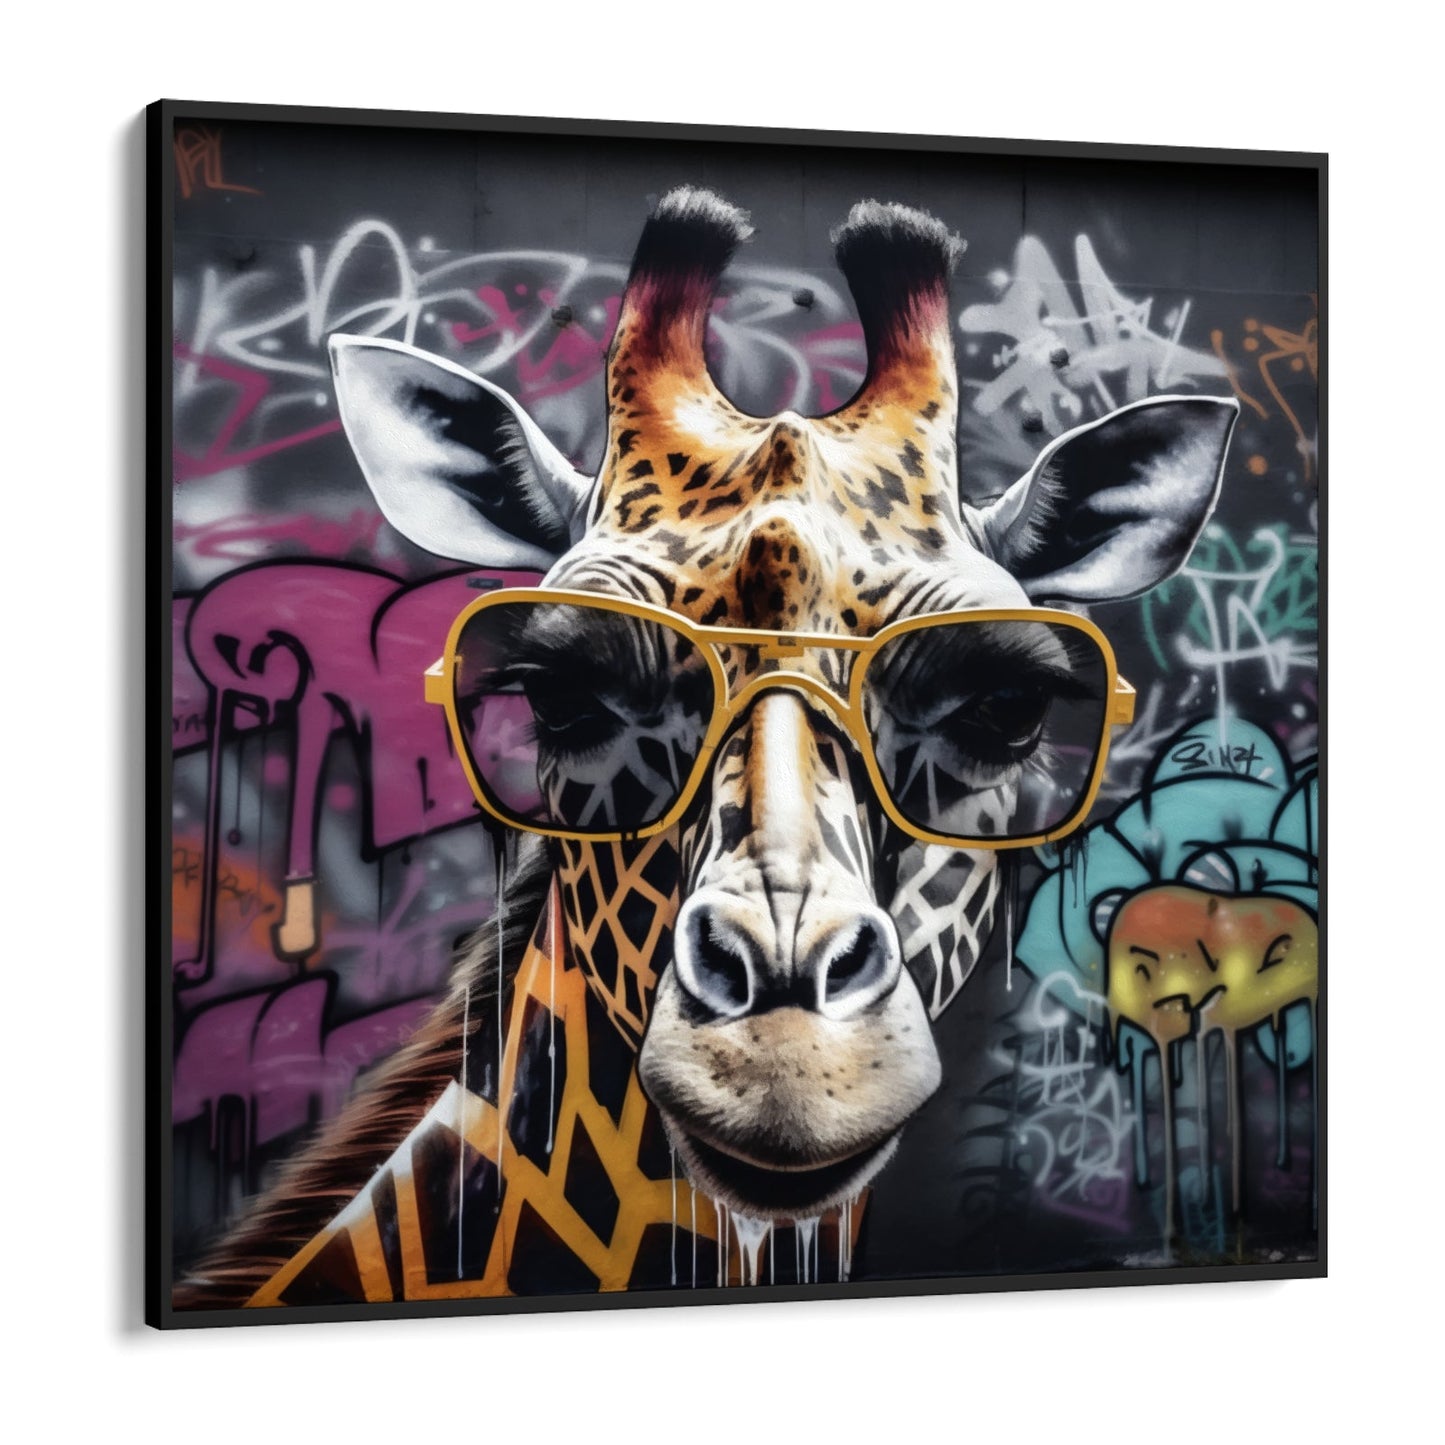 Graffiti giraffe